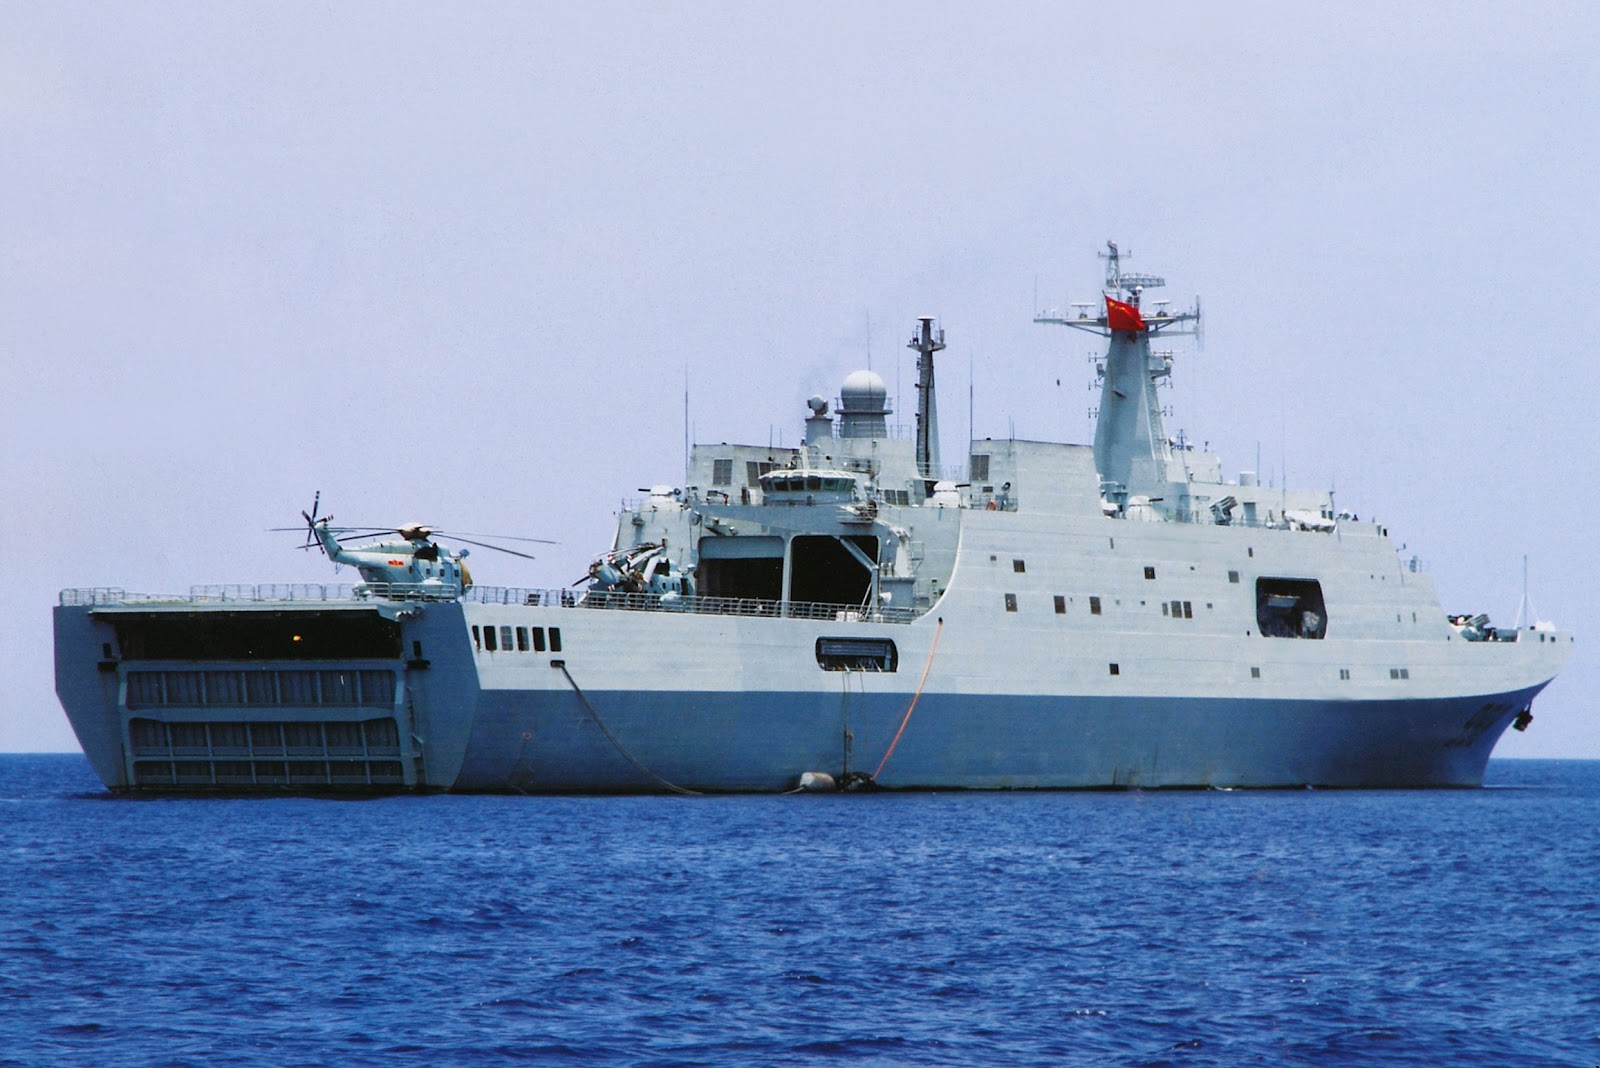 Llegarán para la Armada más helicópteros Sea King - Página 2 Type+071+YUZHAO+Jinggang+Shan%25E4%25BA%2595%25E5%2586%2588+999+Kunlun+Shan%25E6%2598%2586%25E4%25BB%2591%25E5%25B1%25B1+998+Amphibious+Transport+Dock+LPD+amphibious+warfare+ships+of+the+People%2527s+Republic+of+China%2527s+People%2527s+Liberation+Army+Navy+chinese+%25284%2529